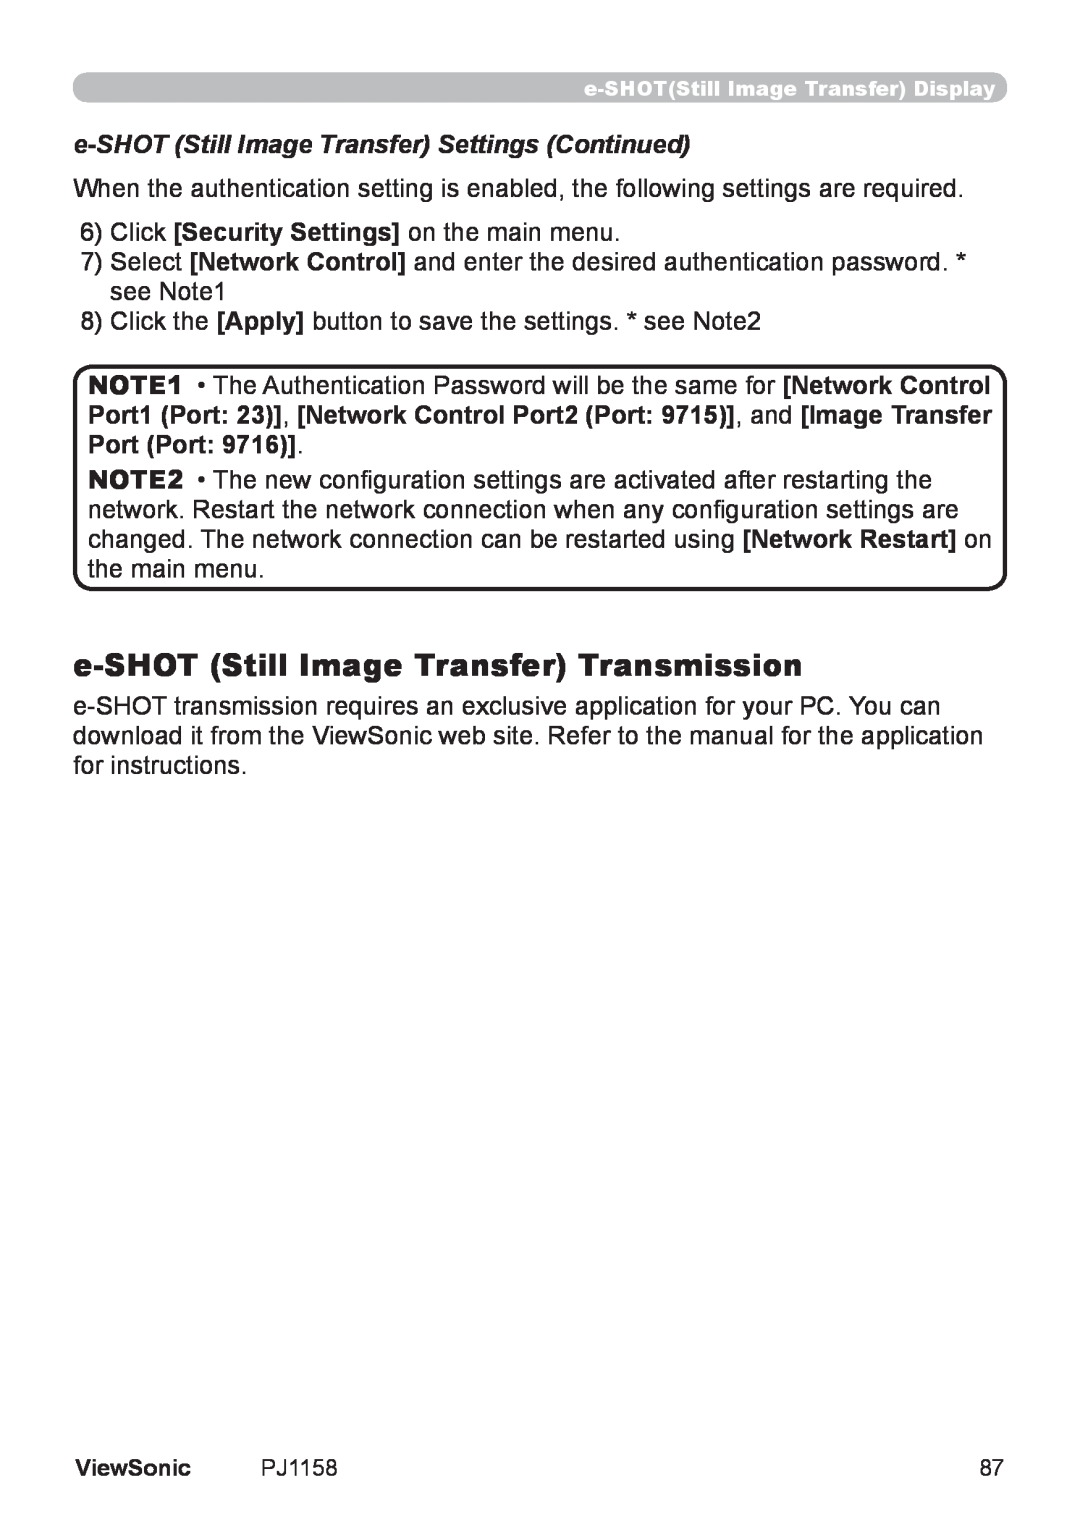 ViewSonic PJ1158 manual e-SHOTStill Image Transfer Transmission, e-SHOTStill Image Transfer Settings Continued 